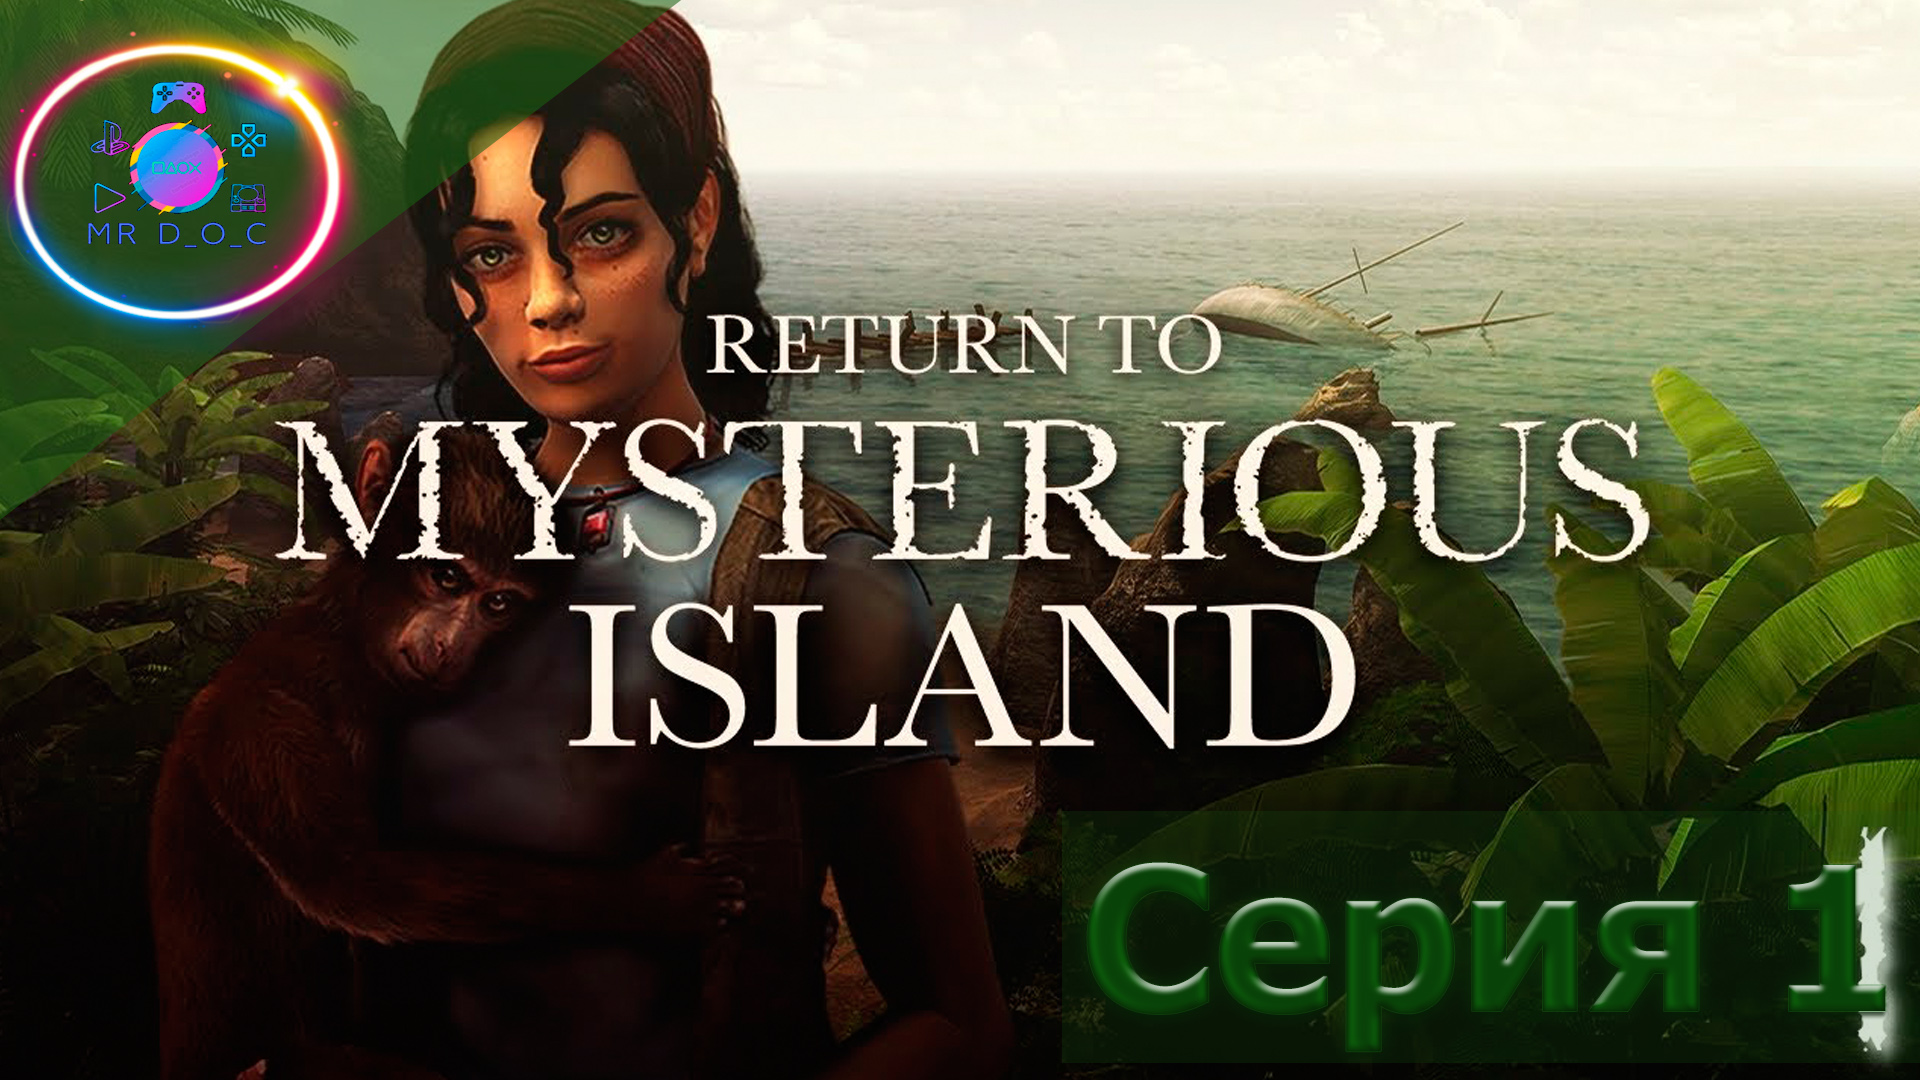 Leave the island. Возвращение на таинственный остров. Возвращение на таинственный остров 2. Таинственный остров игра. Игра Возвращение на таинственный остров.